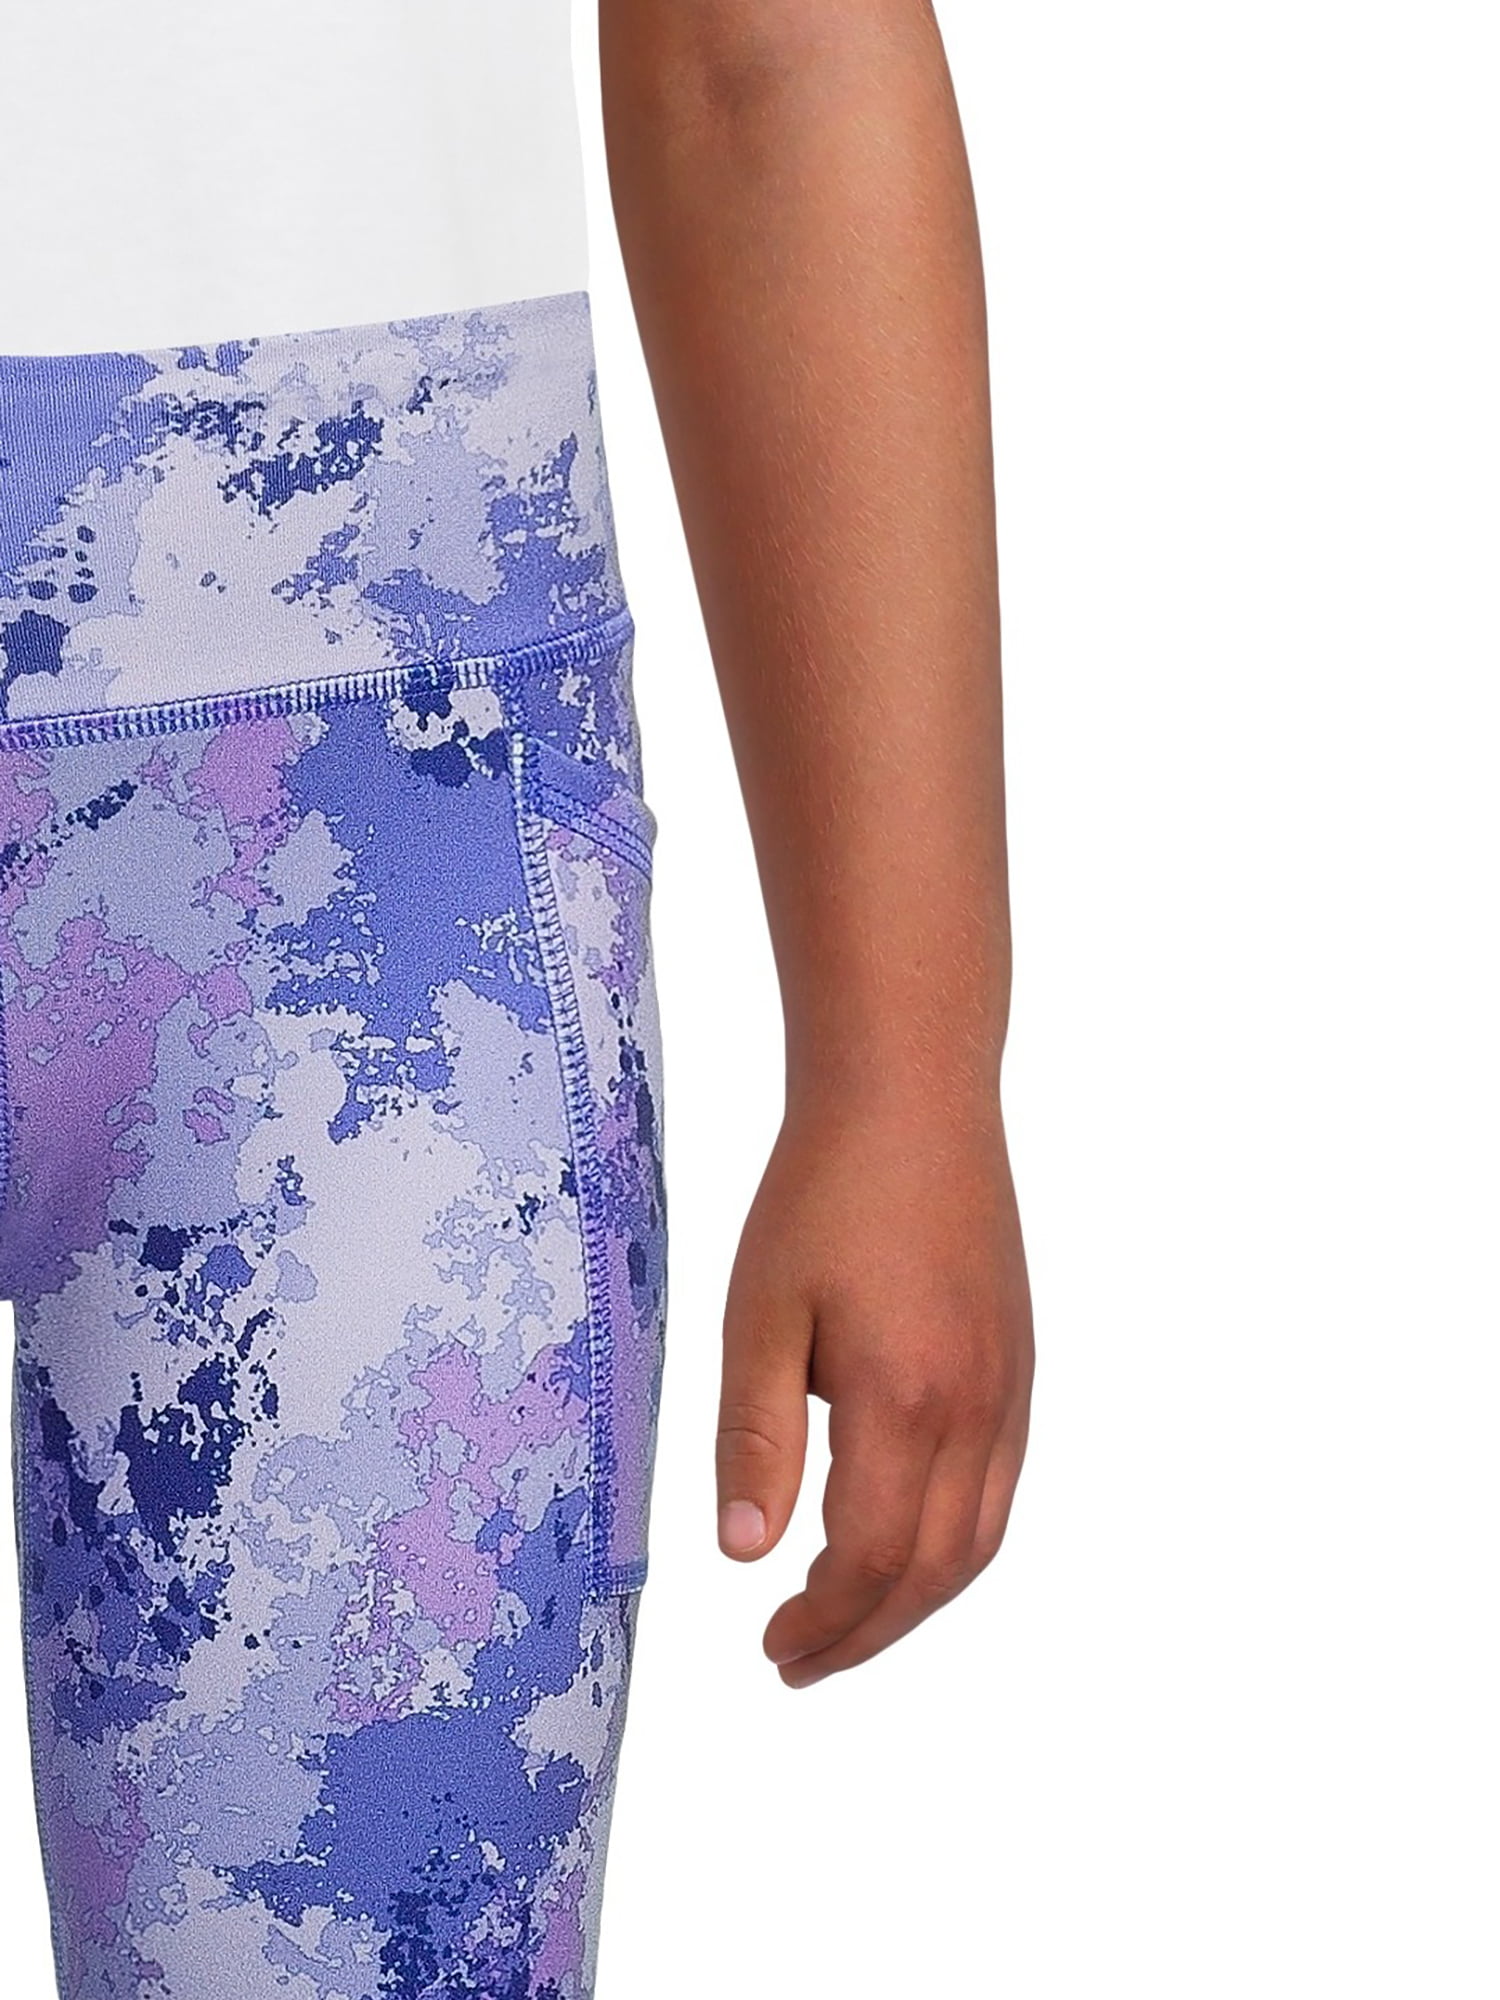 ATHLETIC WORKS KIDS Girls Colorful Polyester Full Length Leggings Multi XS  4-5 $12.99 - PicClick